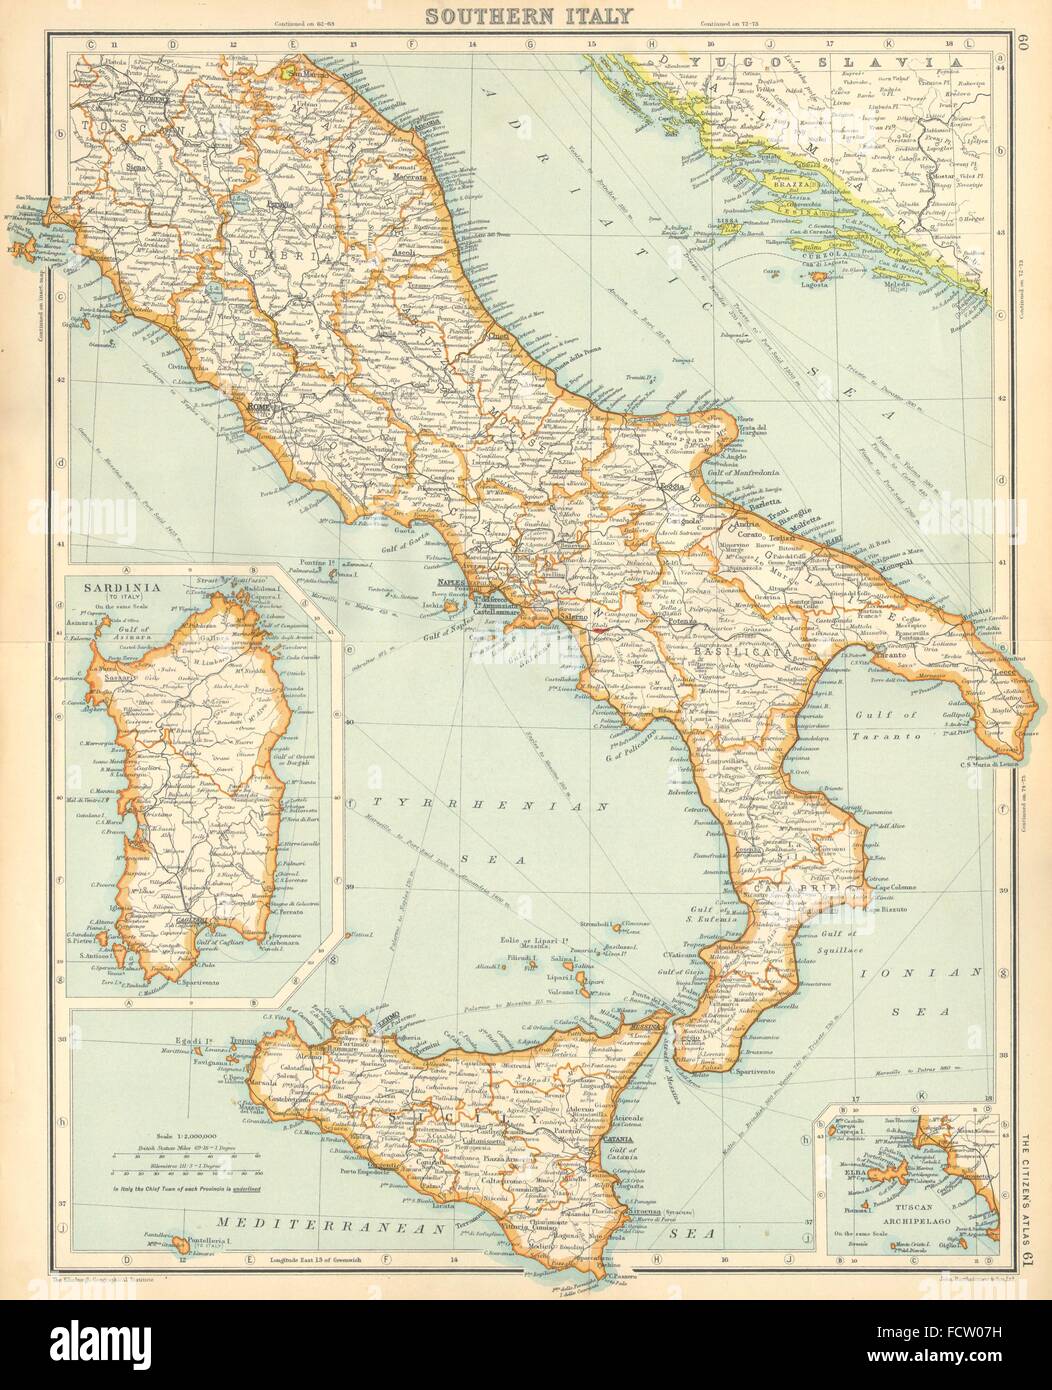 SOUTHERN ITALY: Shows Lagosta island (Lastovo) as Italian. BARTHOLOMEW, 1924 map Stock Photo